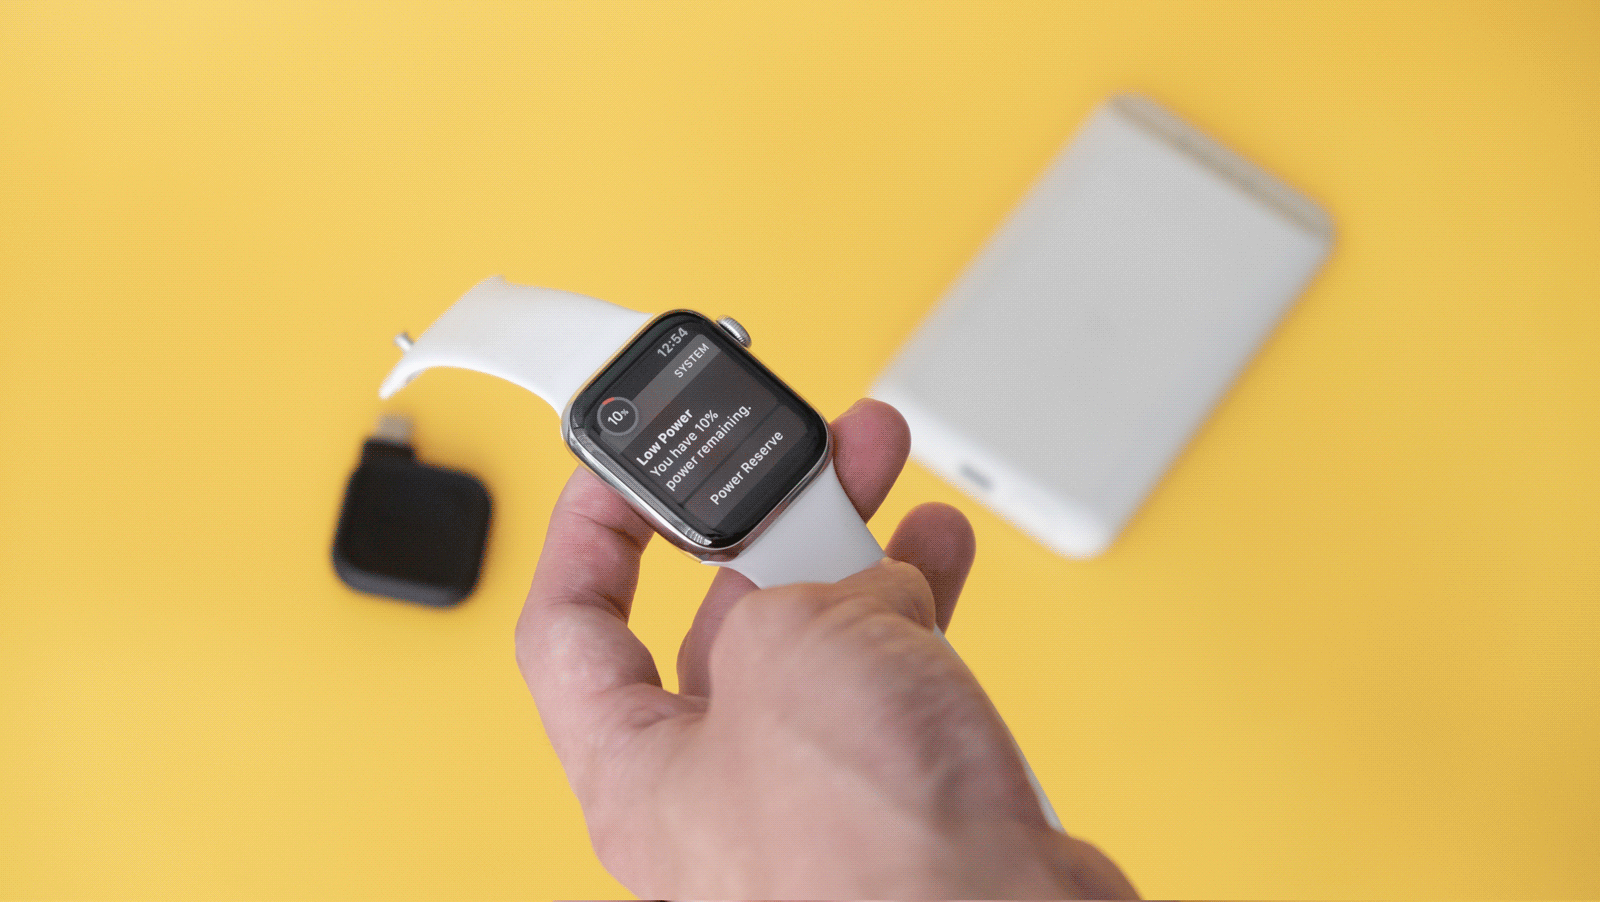 MIPOW Portable Apple Watch Charger - Custom Mac BD